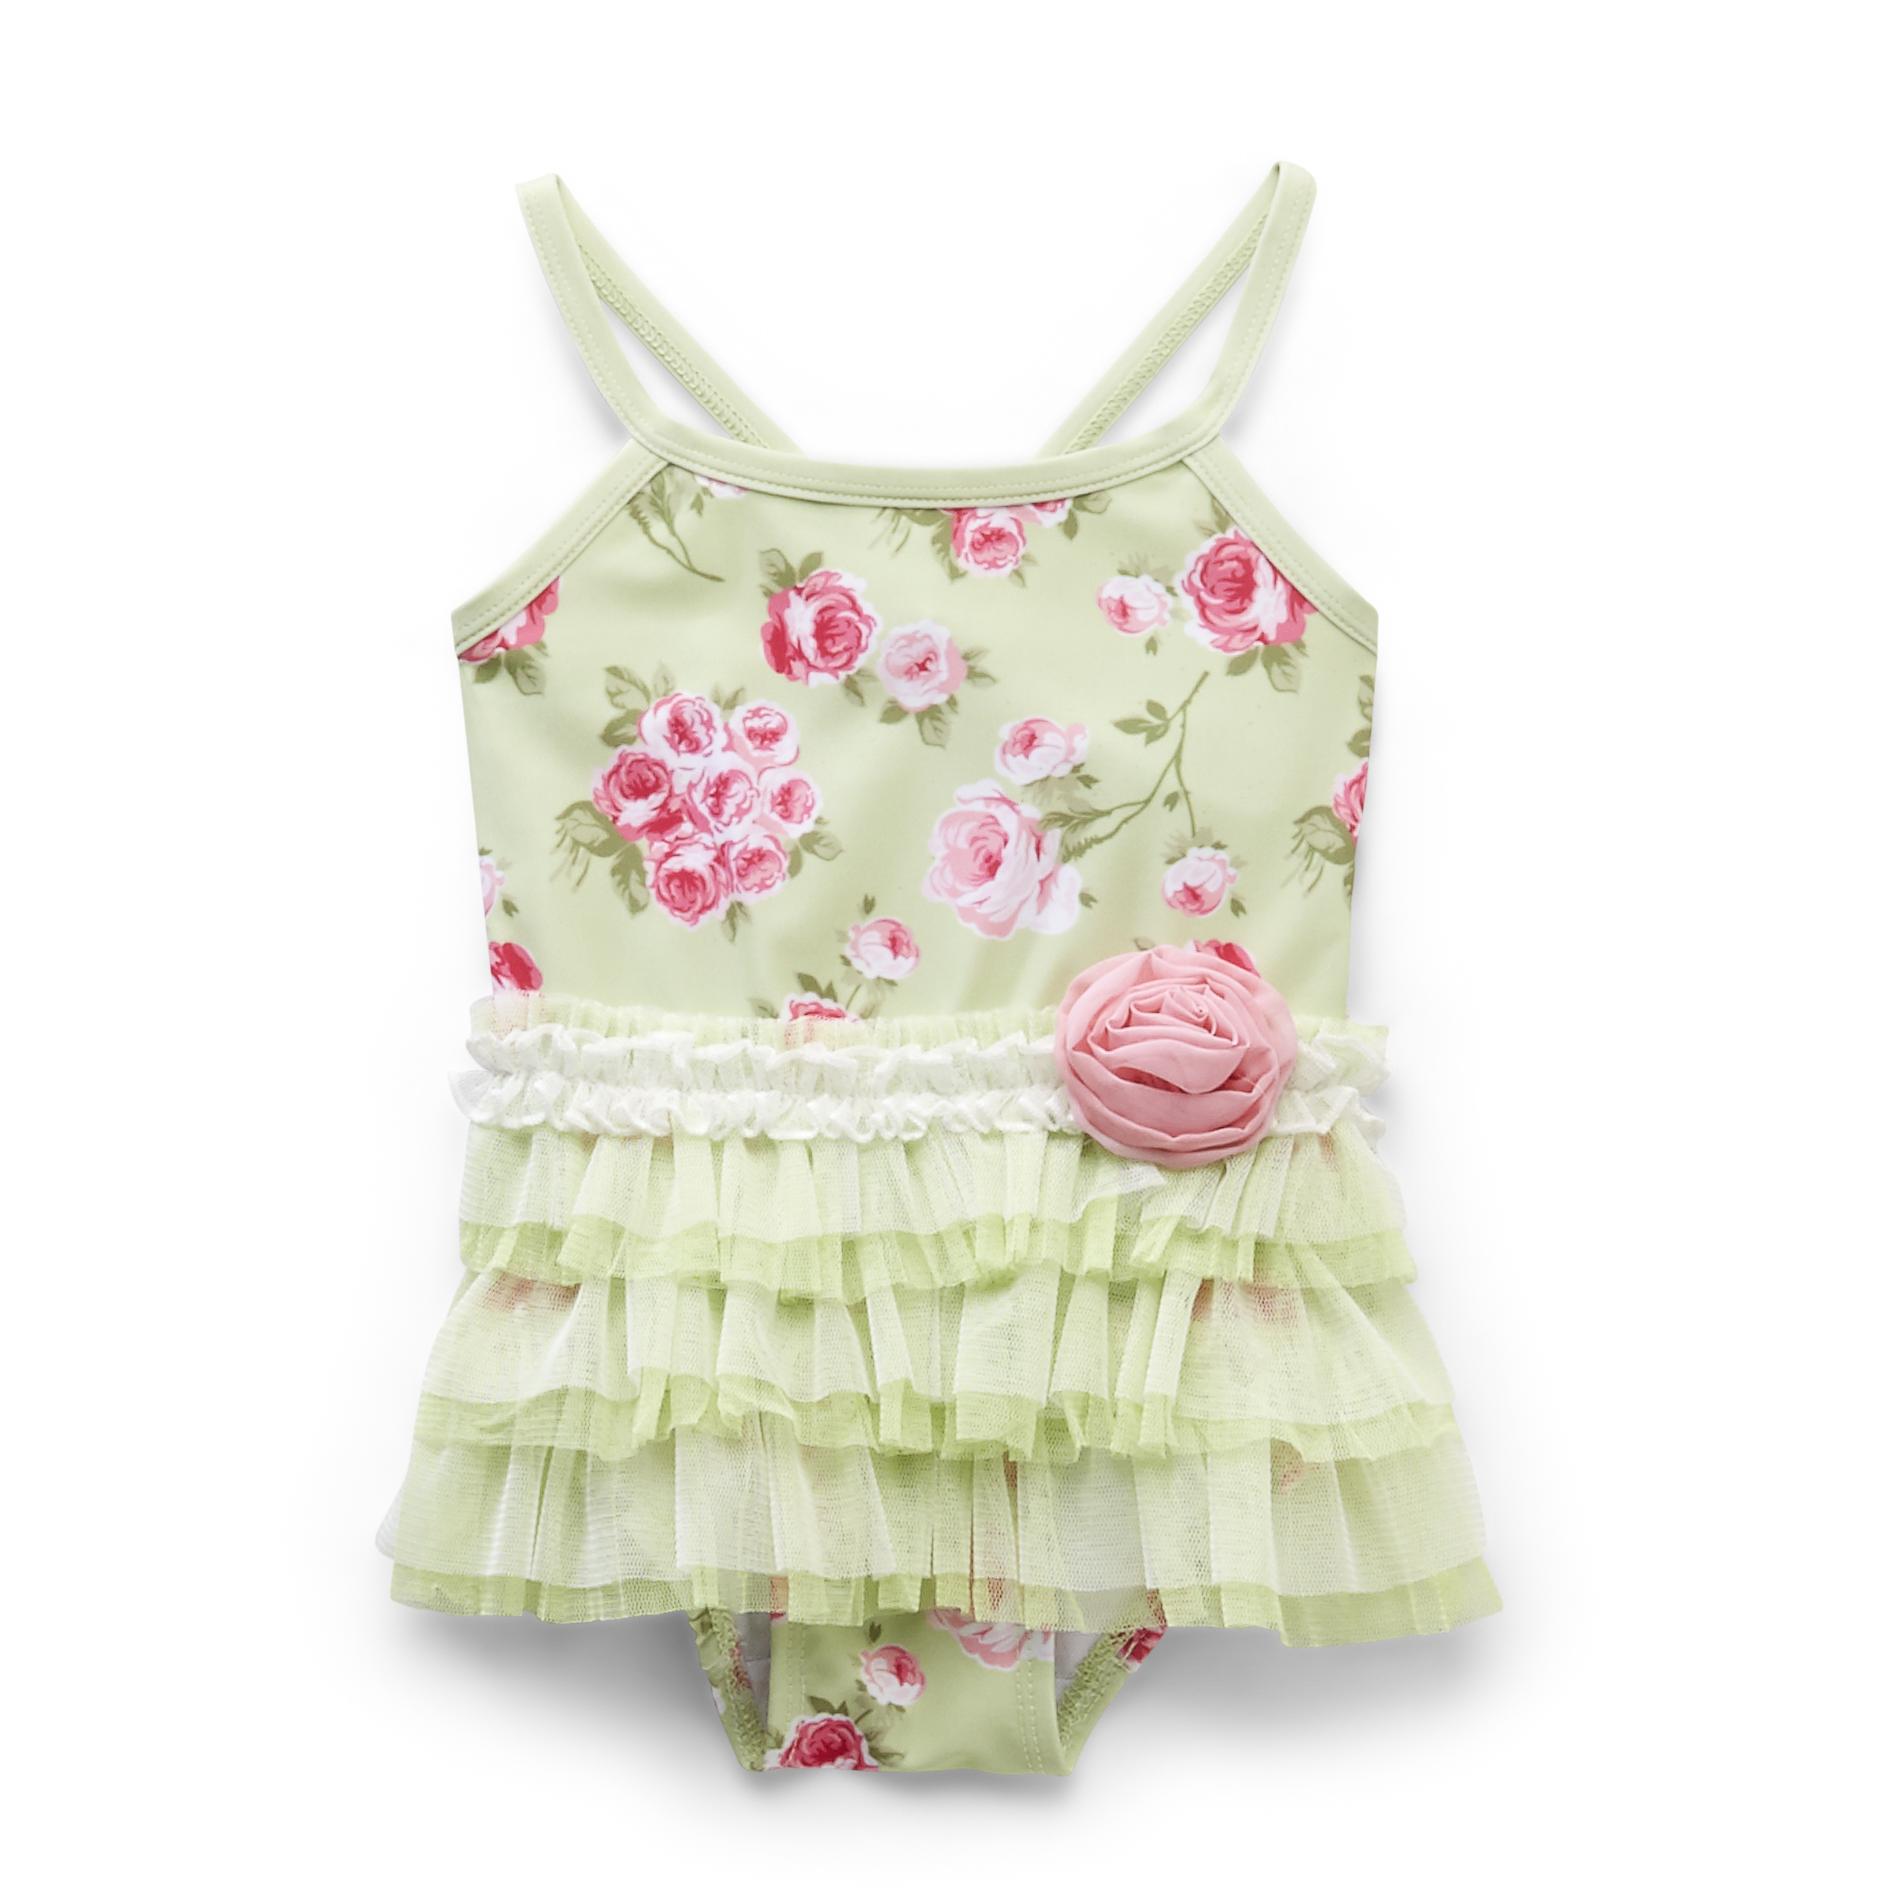 Small Wonders Newborn Girl's Skirted Swimsuit - Floral Print